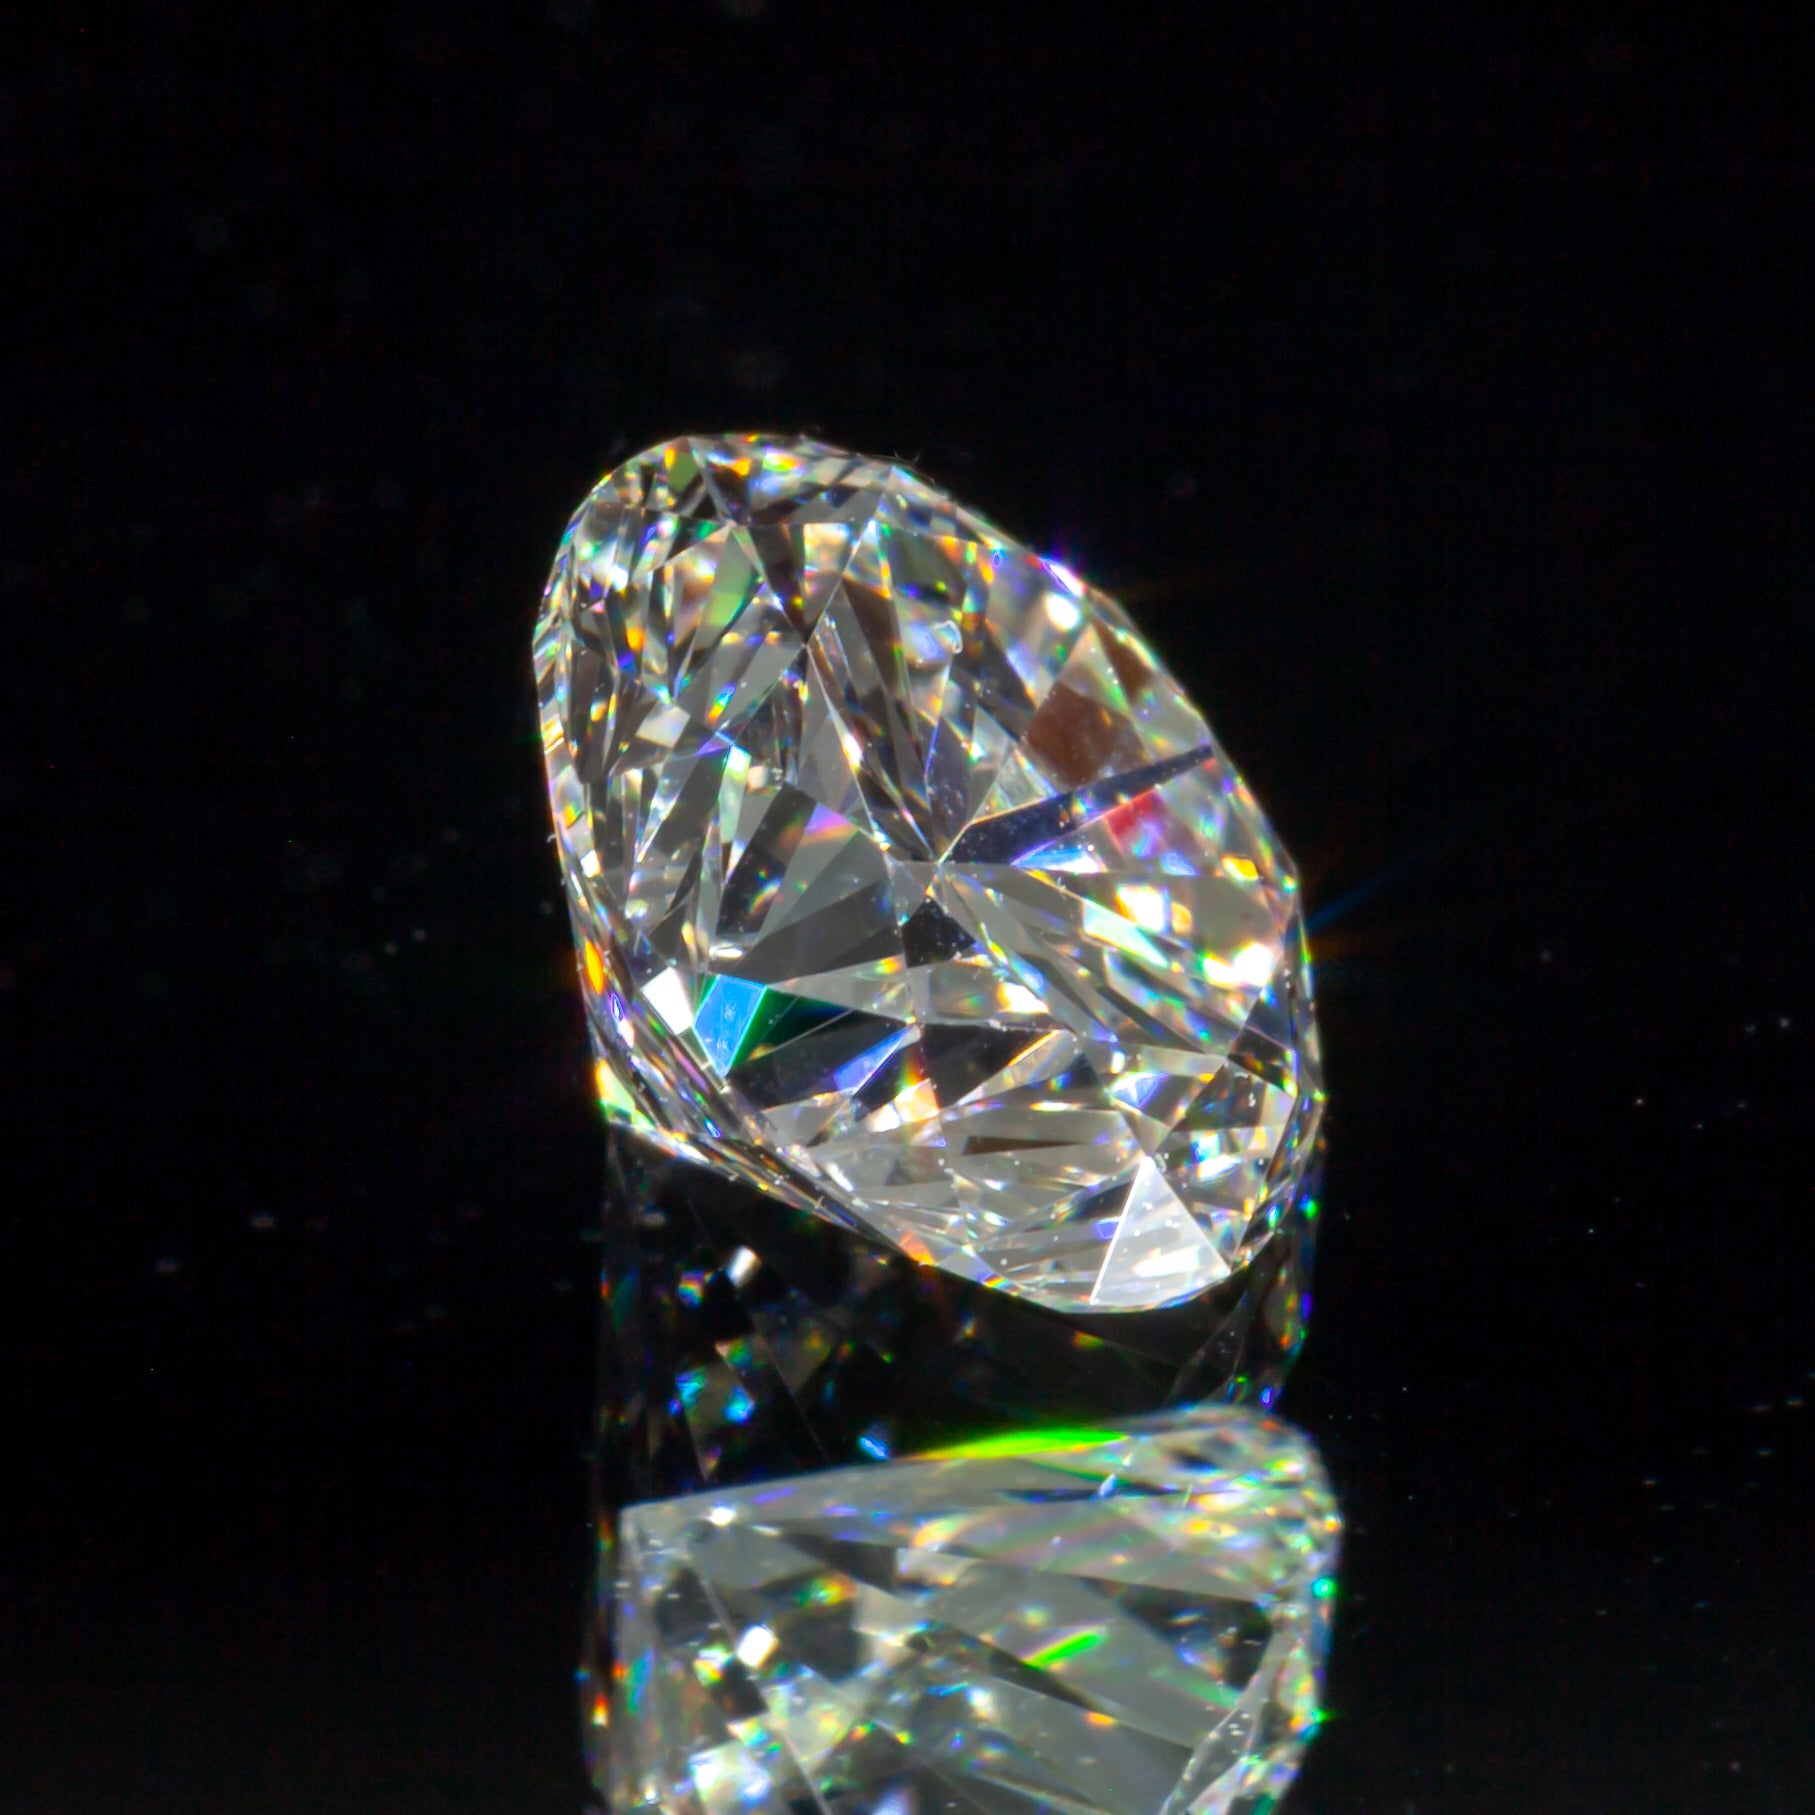 Diamond General Info
Diamond Cut: Round brilliant
Measurements:6.33  x  6.40  -  4.04 mm

Diamond Grading Results
Carat Weight:1.02
Color Grade: H
Clarity Grade: VS1

Additional Grading Information 
Polish:  Good
Symmetry: Good
Fluorescence: